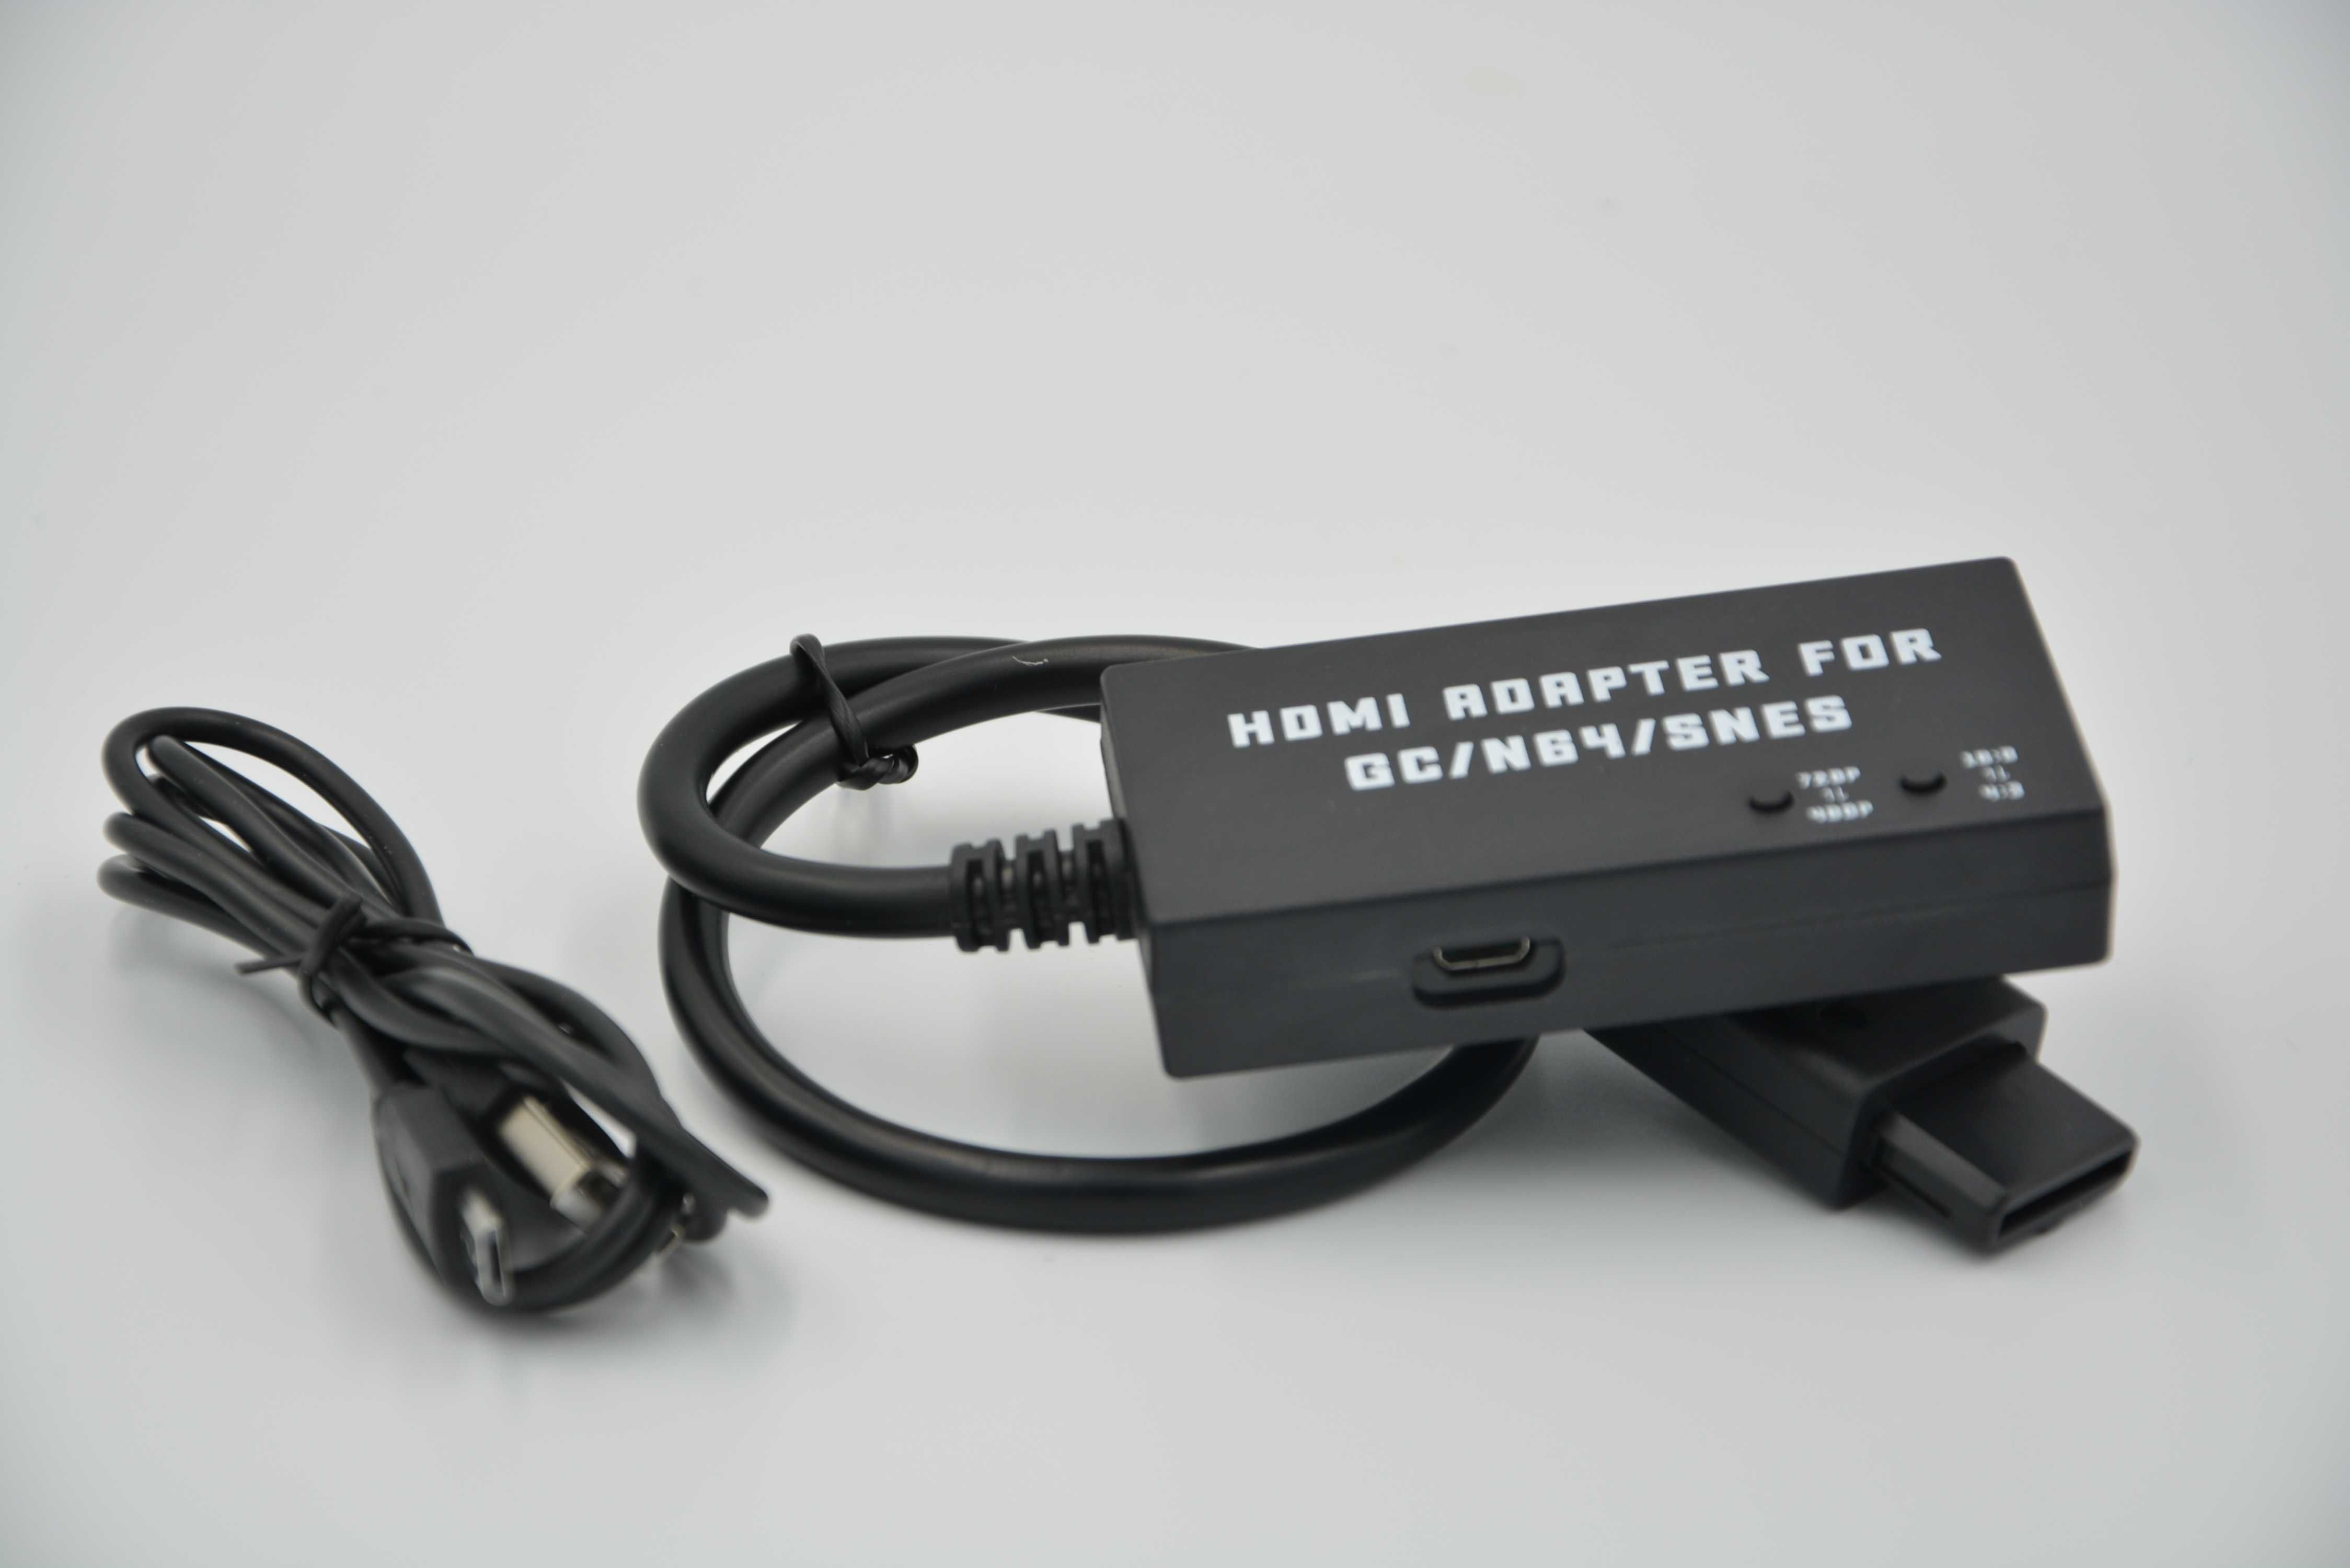 Adapter sygnału z GC/N64/SNES na HDMI konsole